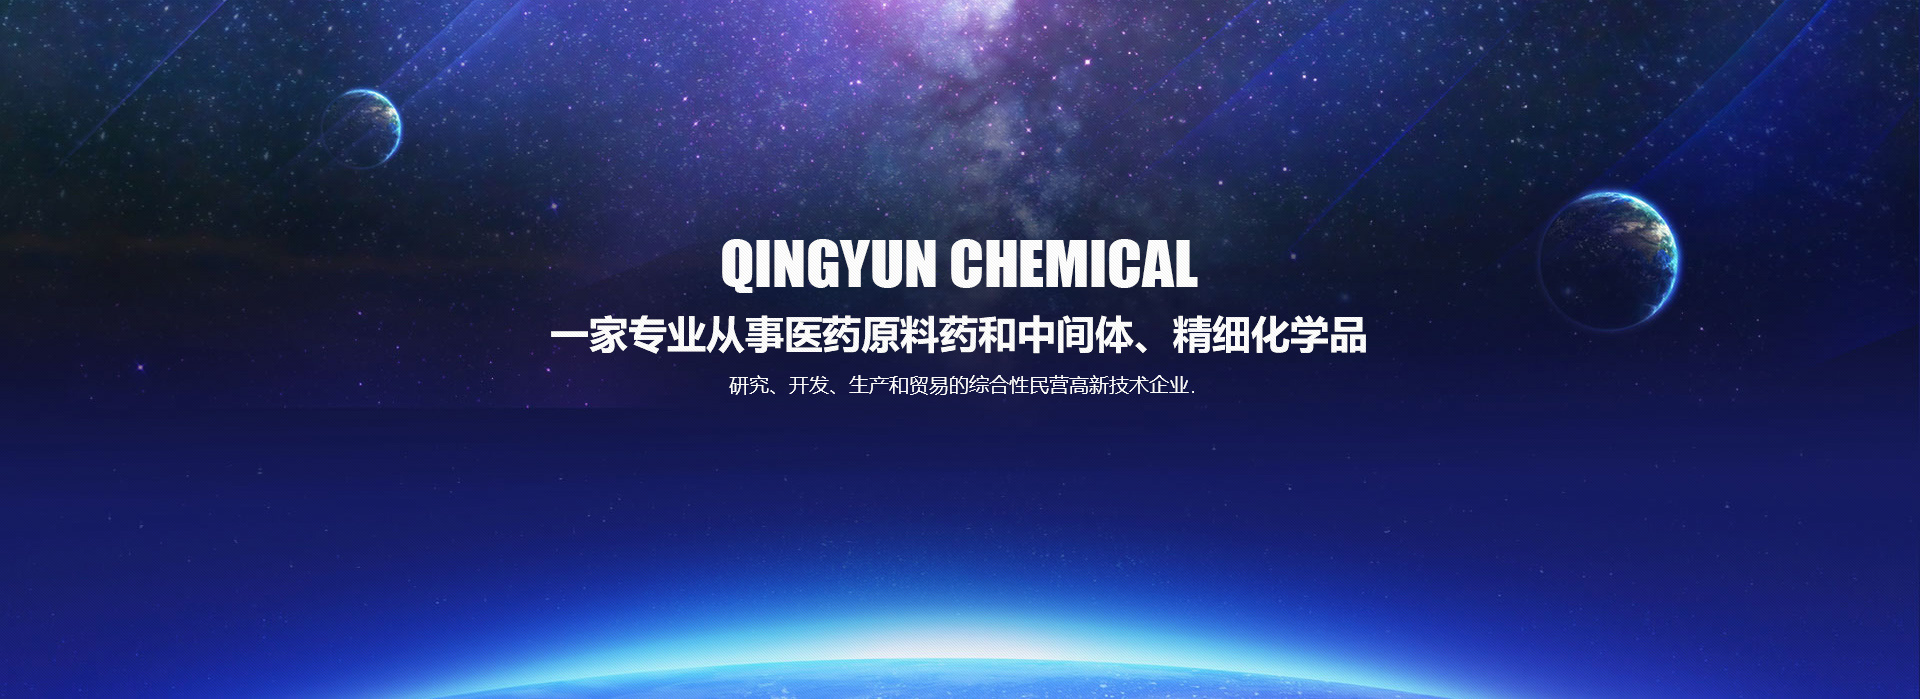 Anhui Qingyun Pharmaceutical Co., Ltd.